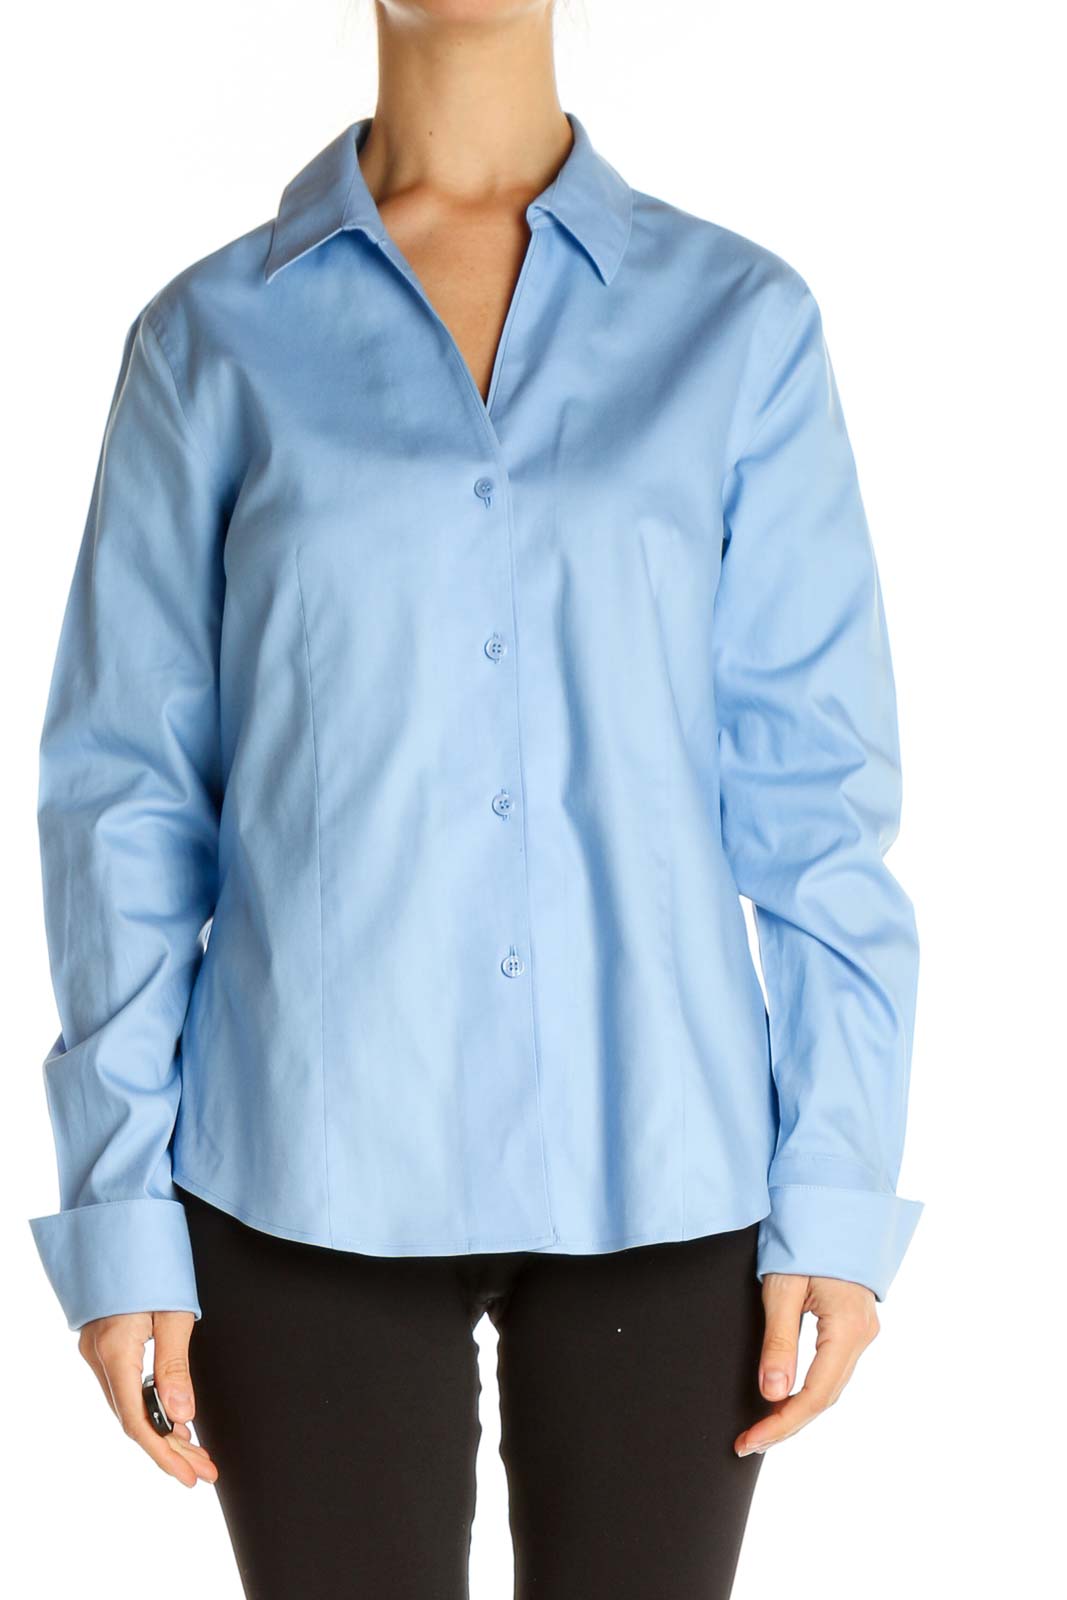 Blue Solid Formal Shirt Front